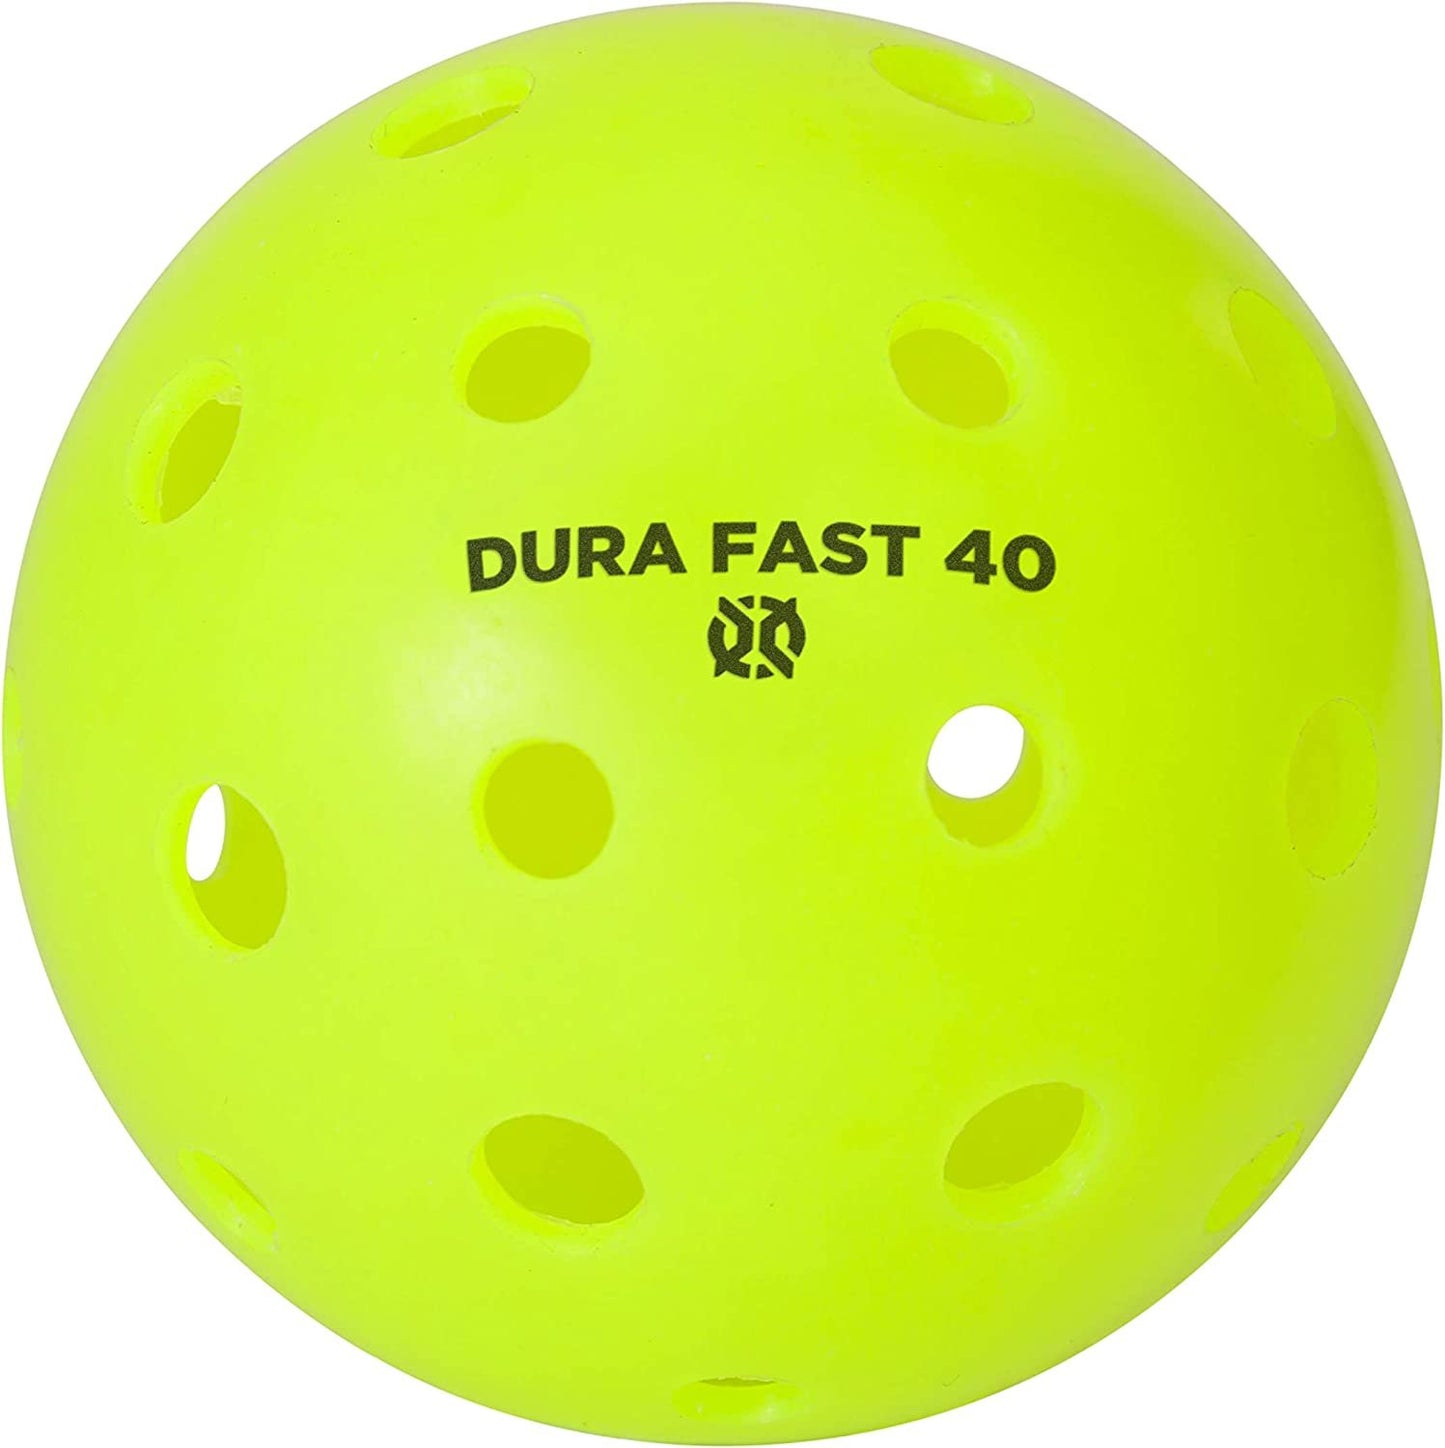 Onix Pickleball Dura Fast 40 Pickleball Balls, Neon Green , 3 balls